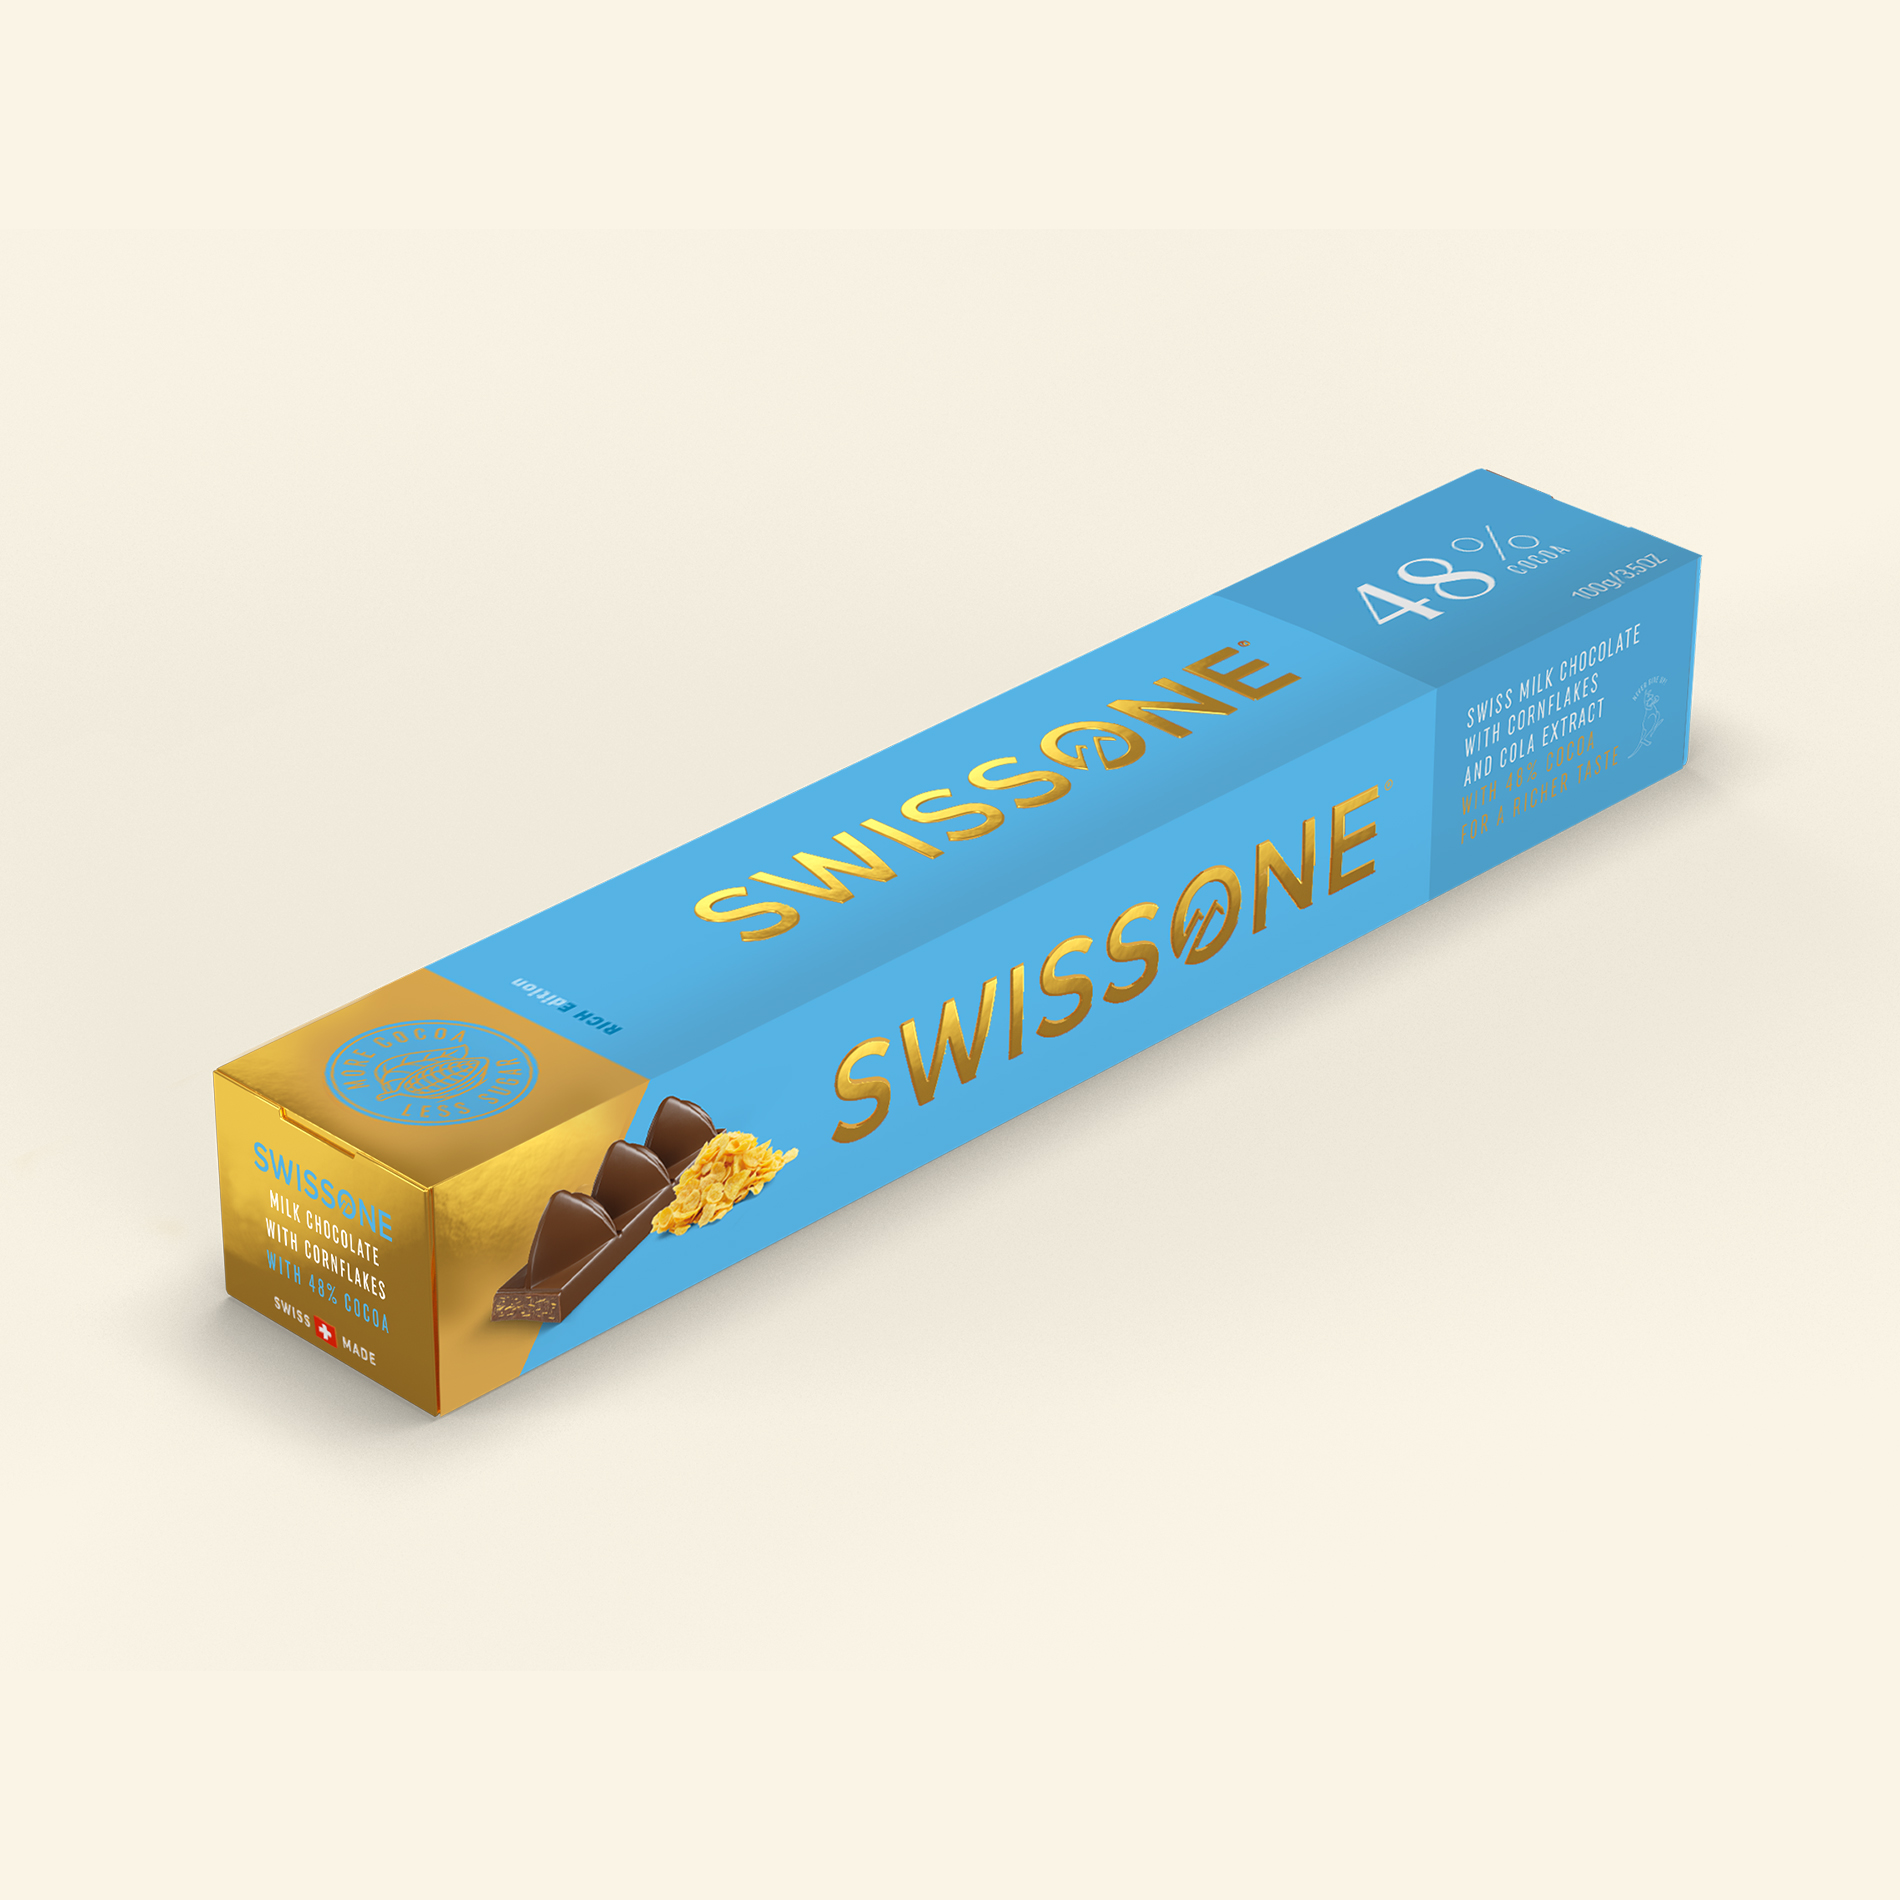 Swissone Milk Chocolate with Cornflakes 48%, 100g